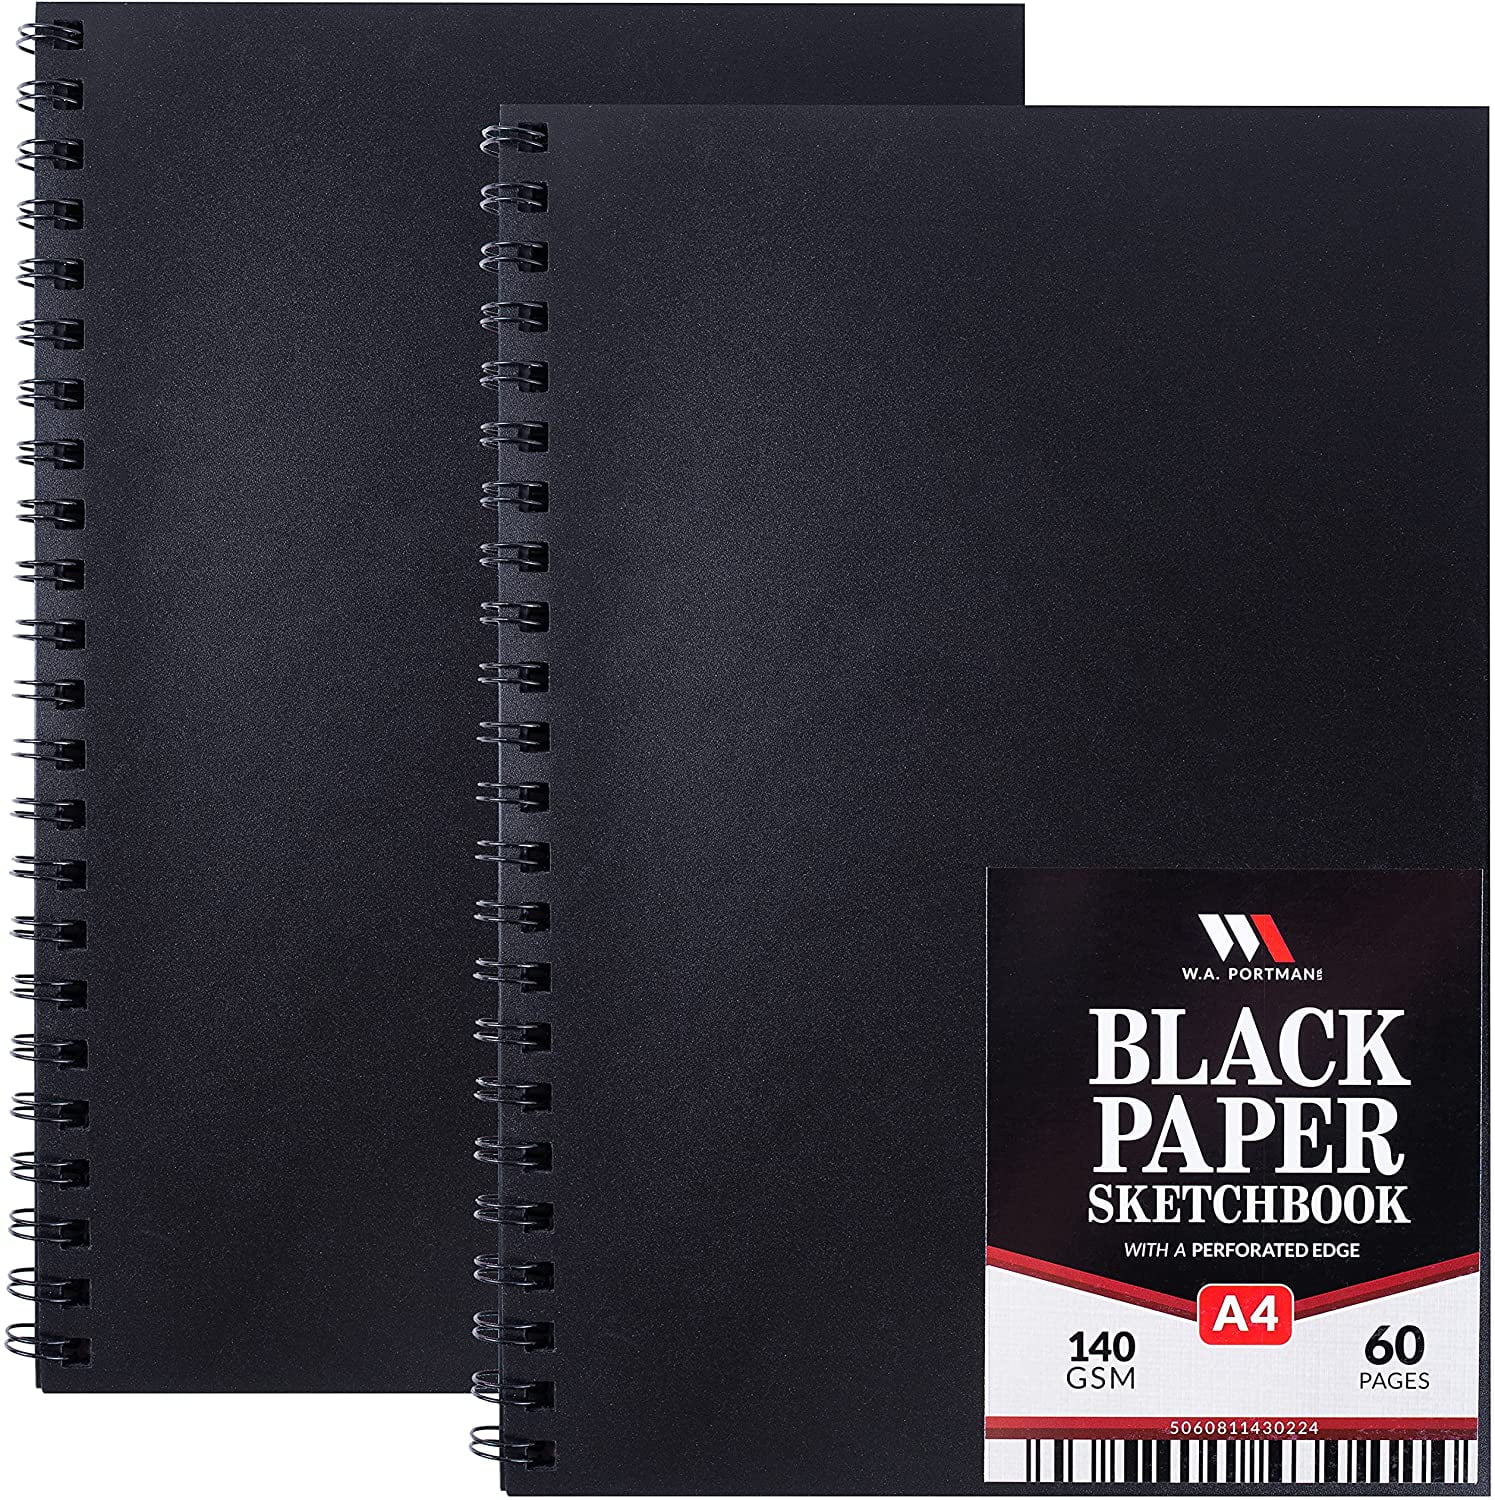 Derwent Black Paper Sketch Book - A4 Portrait, 40 Sheets, Acid-Free Paper,  Wirebound Spine, Professional Quality, Black Book, 2300379